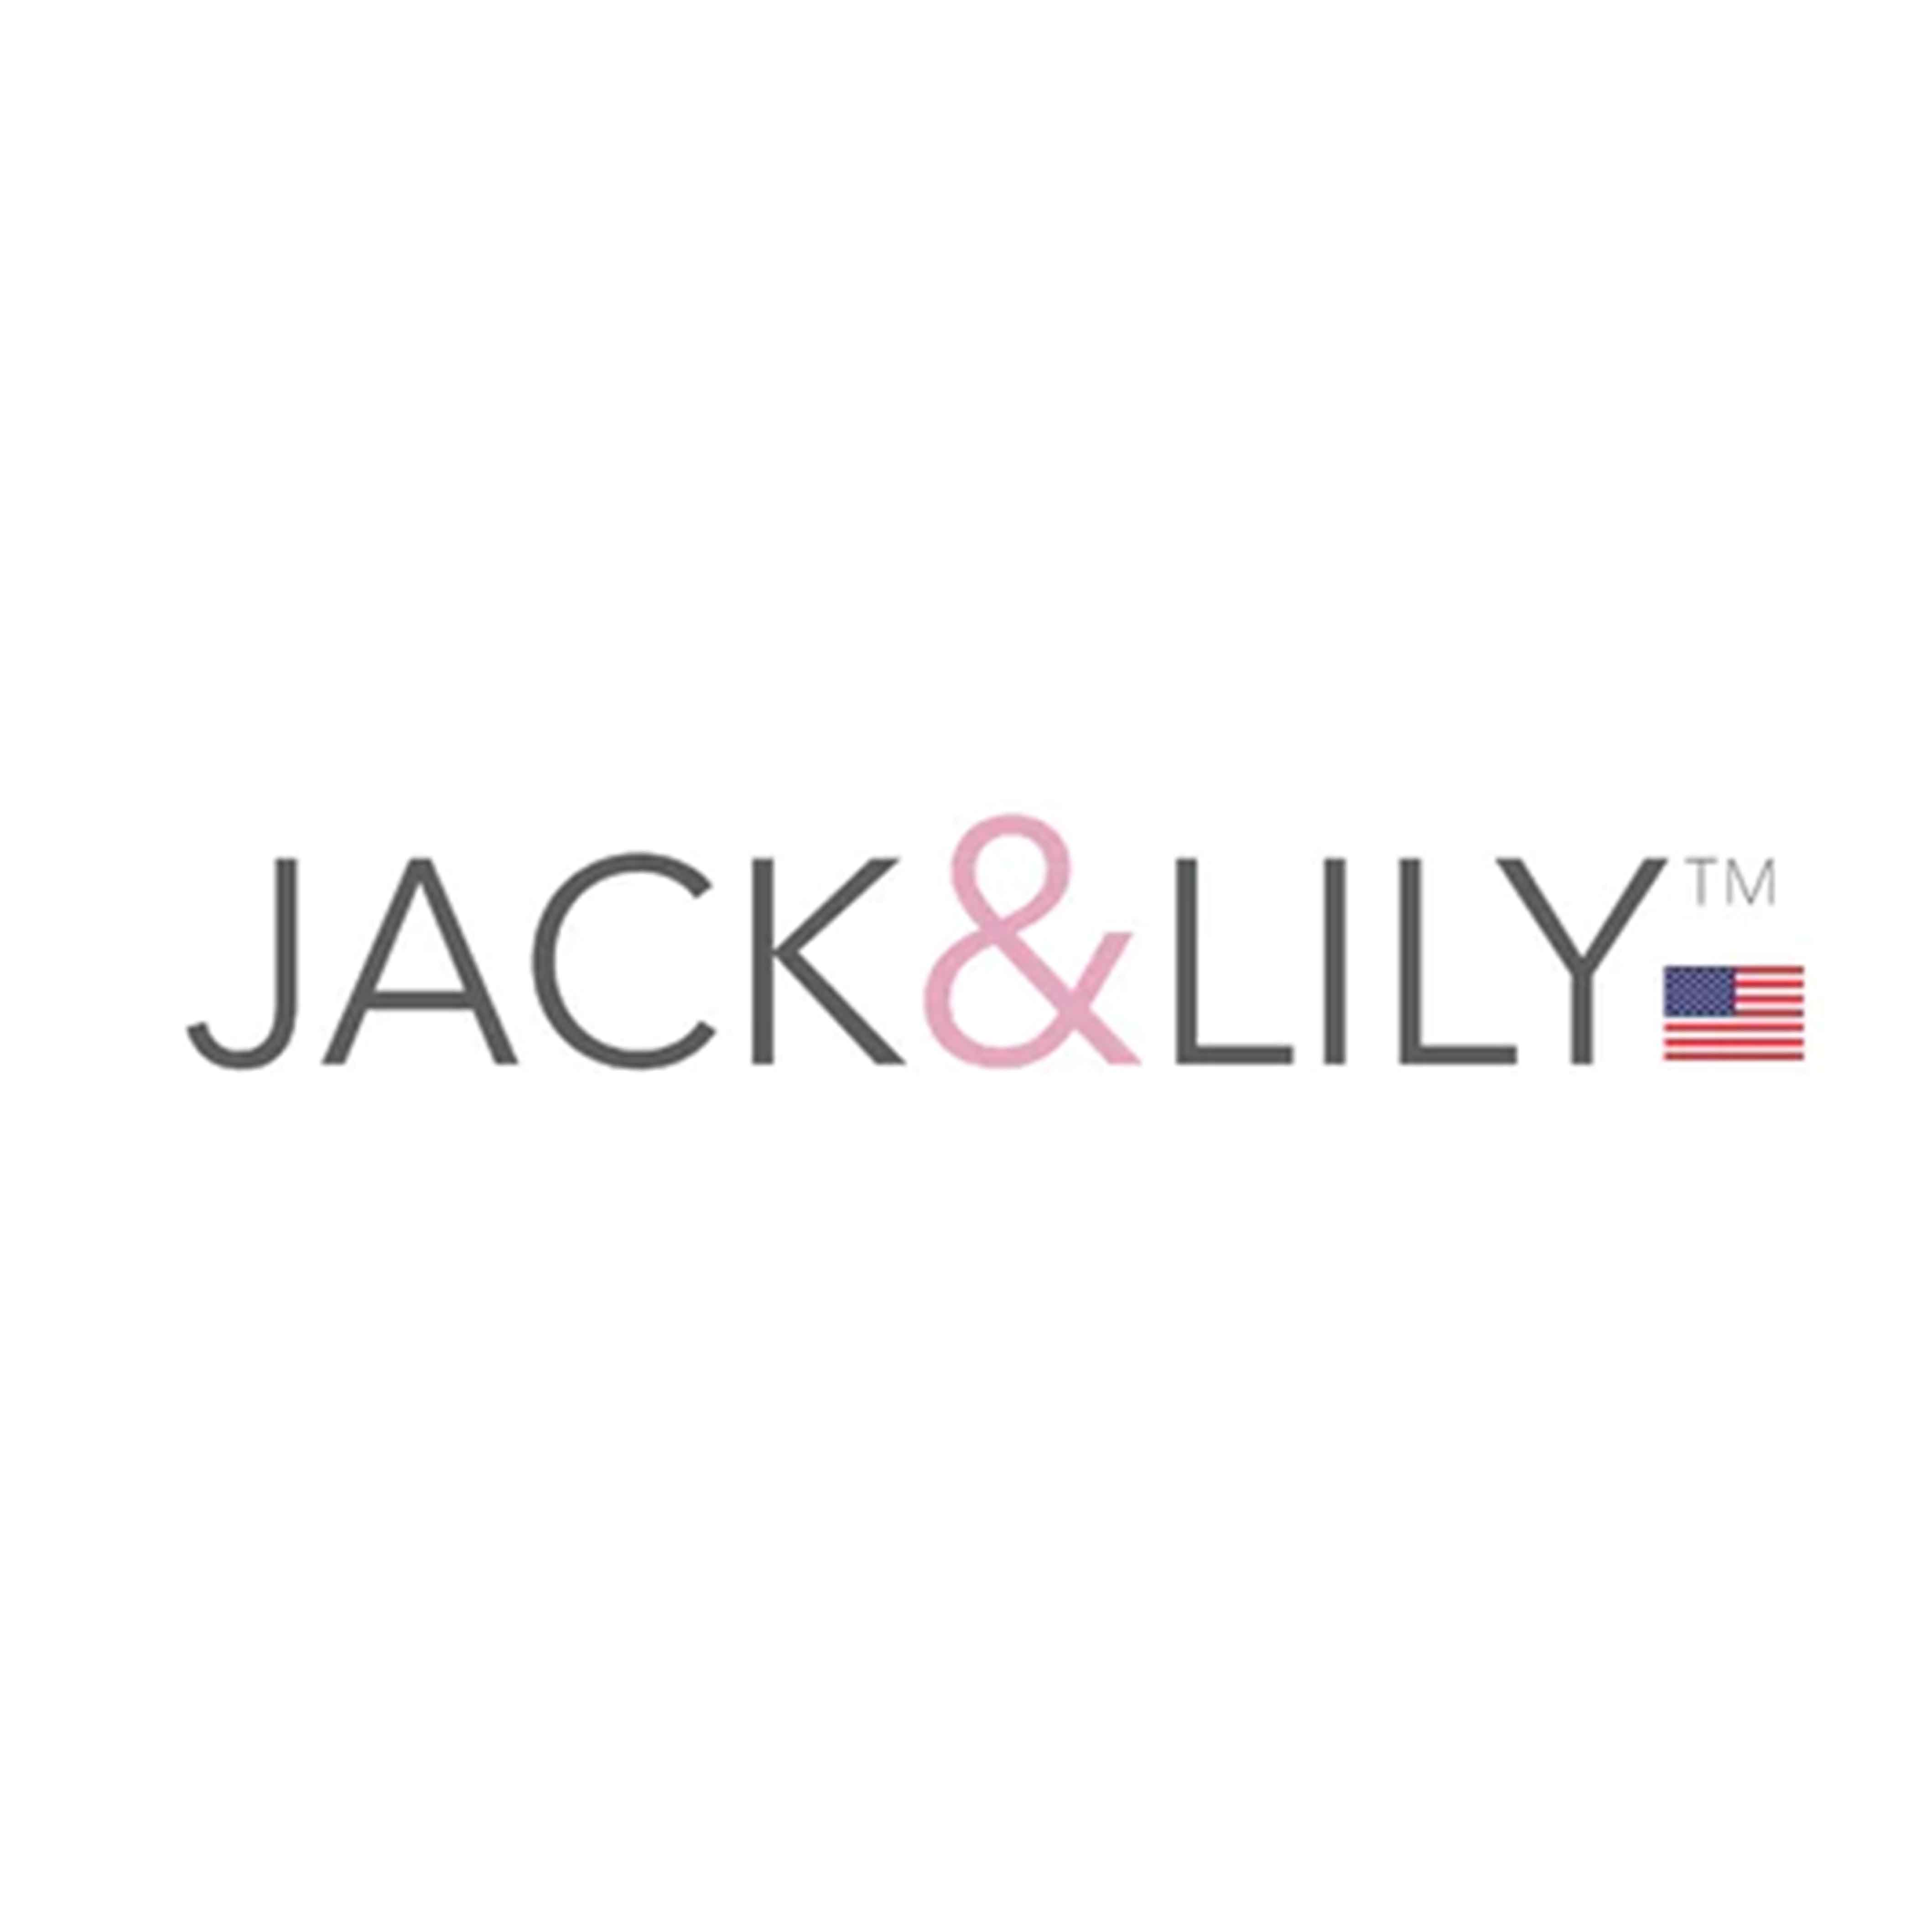 Jack & Lily promo codes